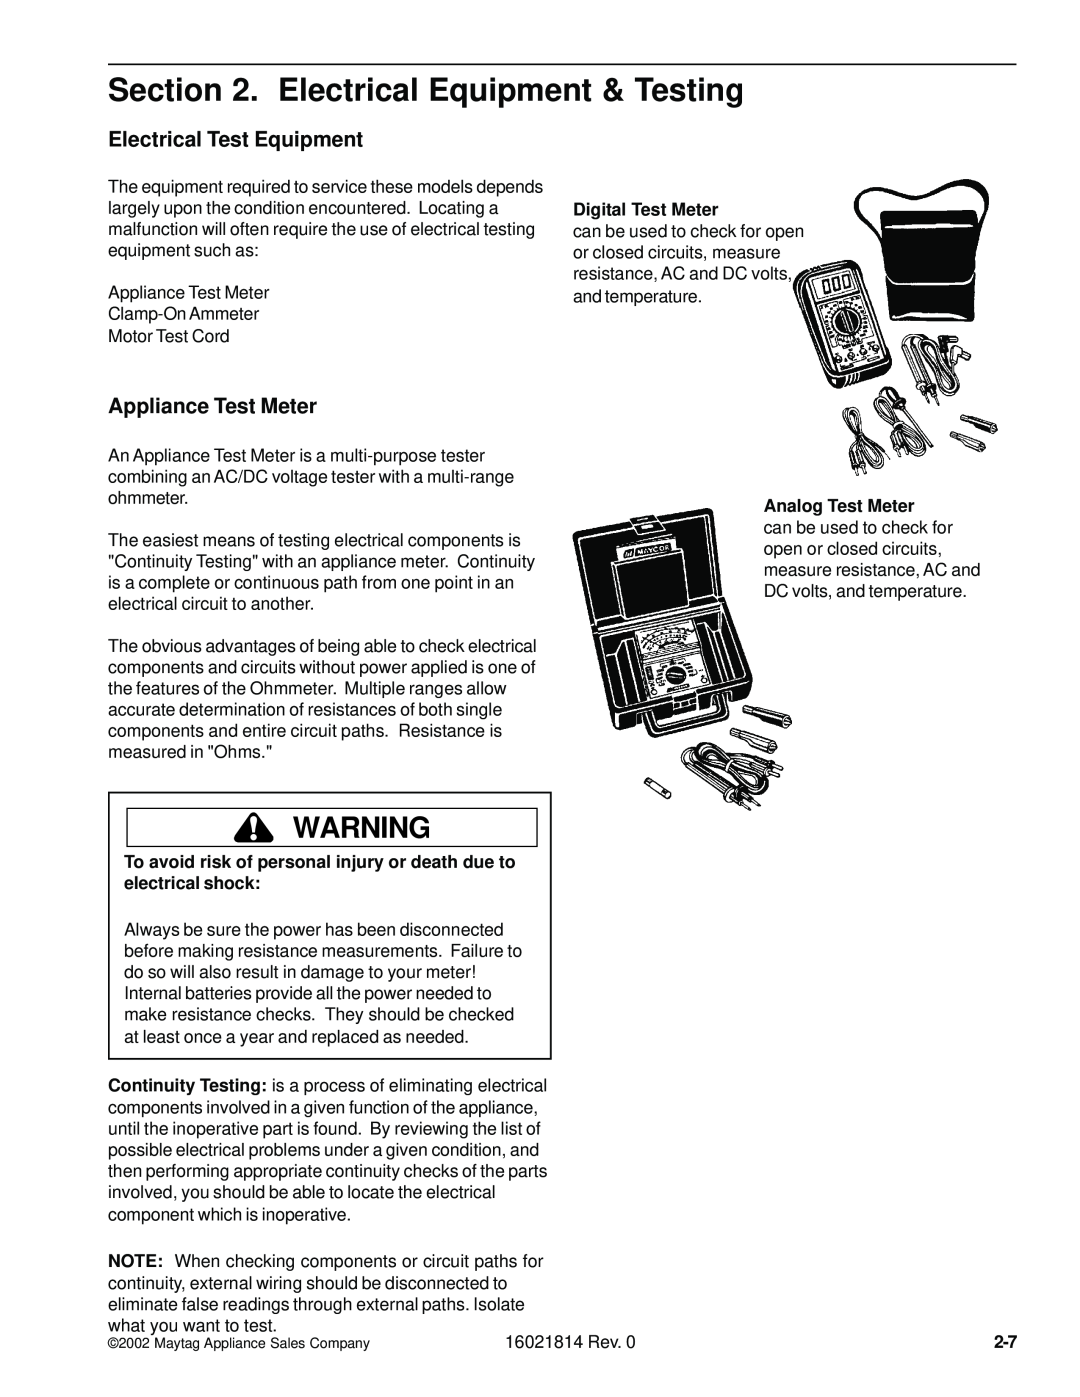 Maytag JDB4000AW manual Electrical Equipment & Testing, Electrical Test Equipment, Appliance Test Meter, Digital Test Meter 